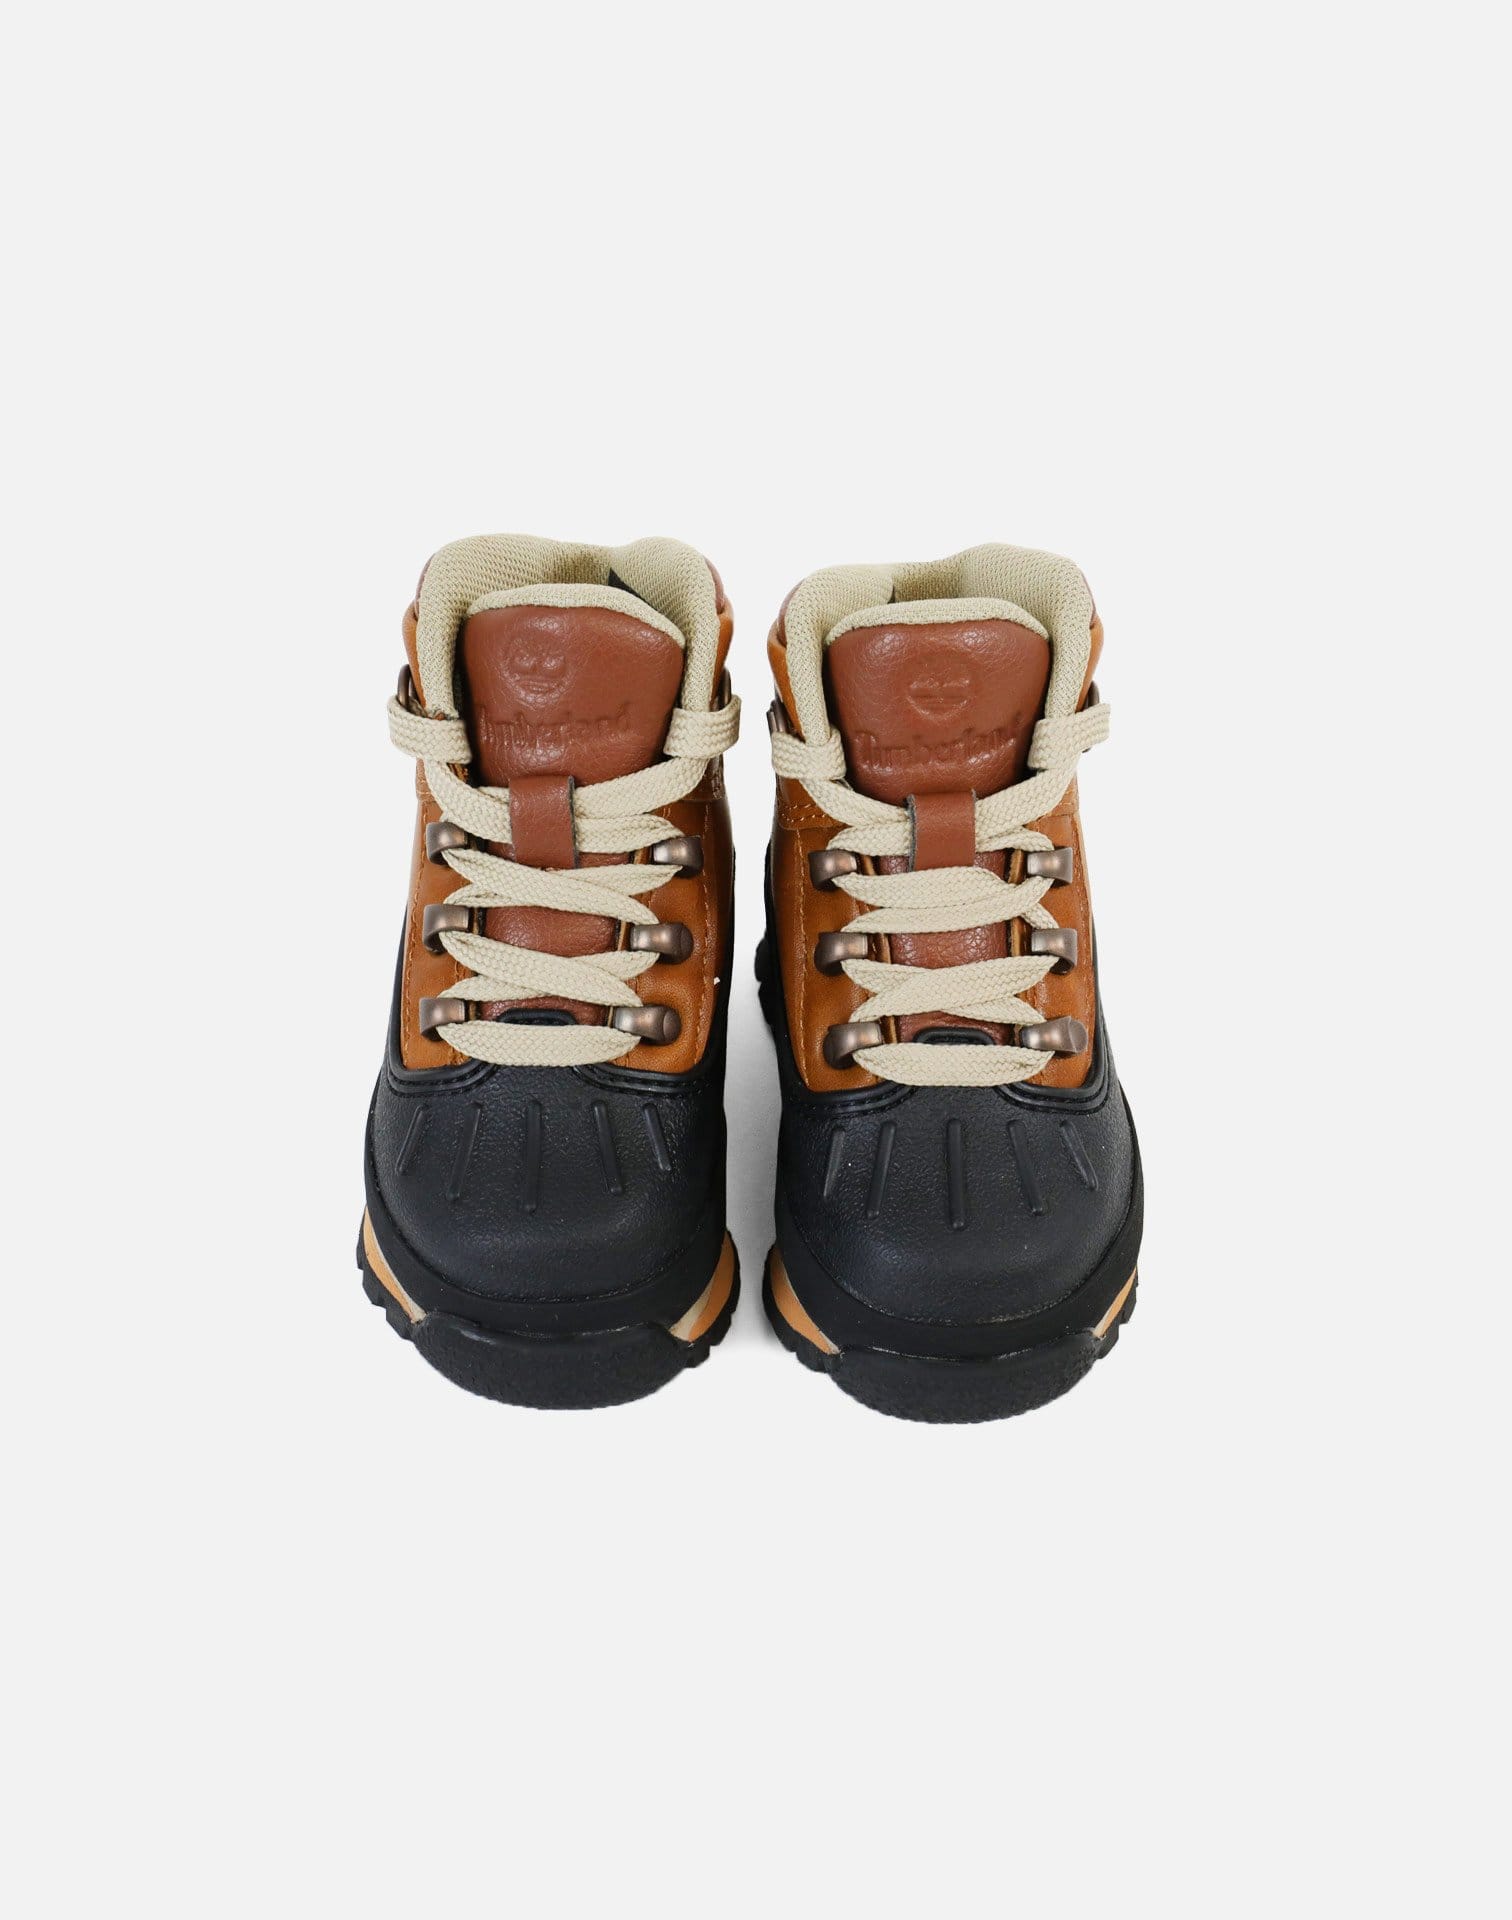 Timberland Shell Toe Euro Hiker Boots Infant (Burnt Orange/Black)